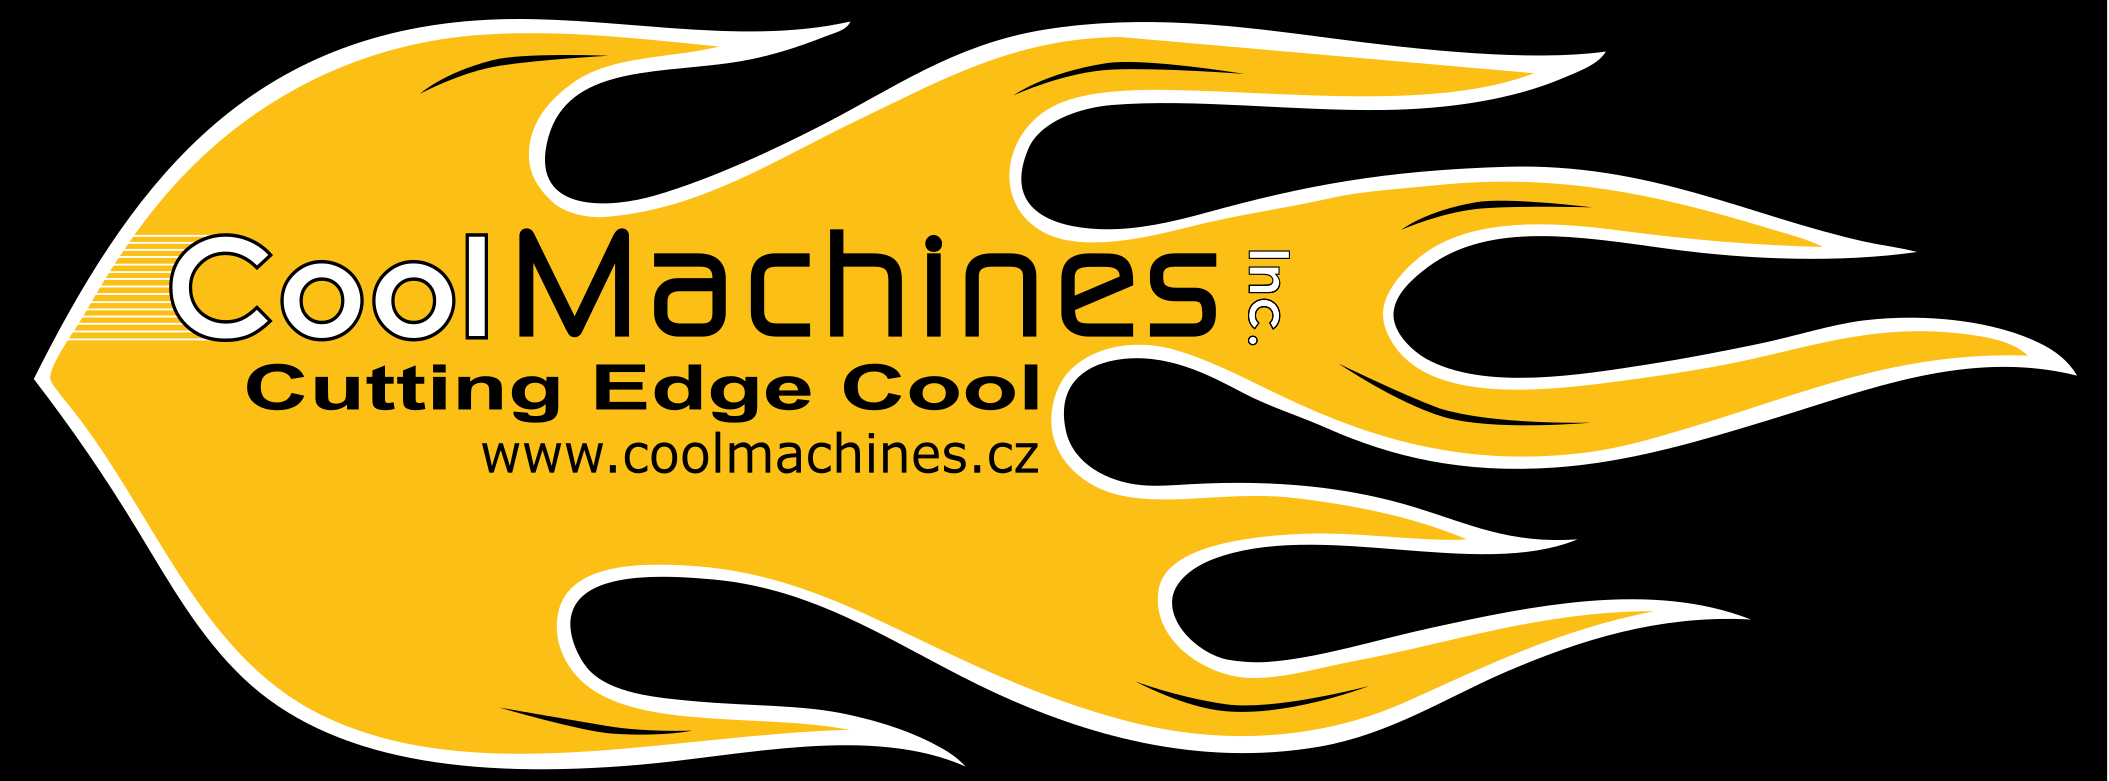 Coolmachines logo